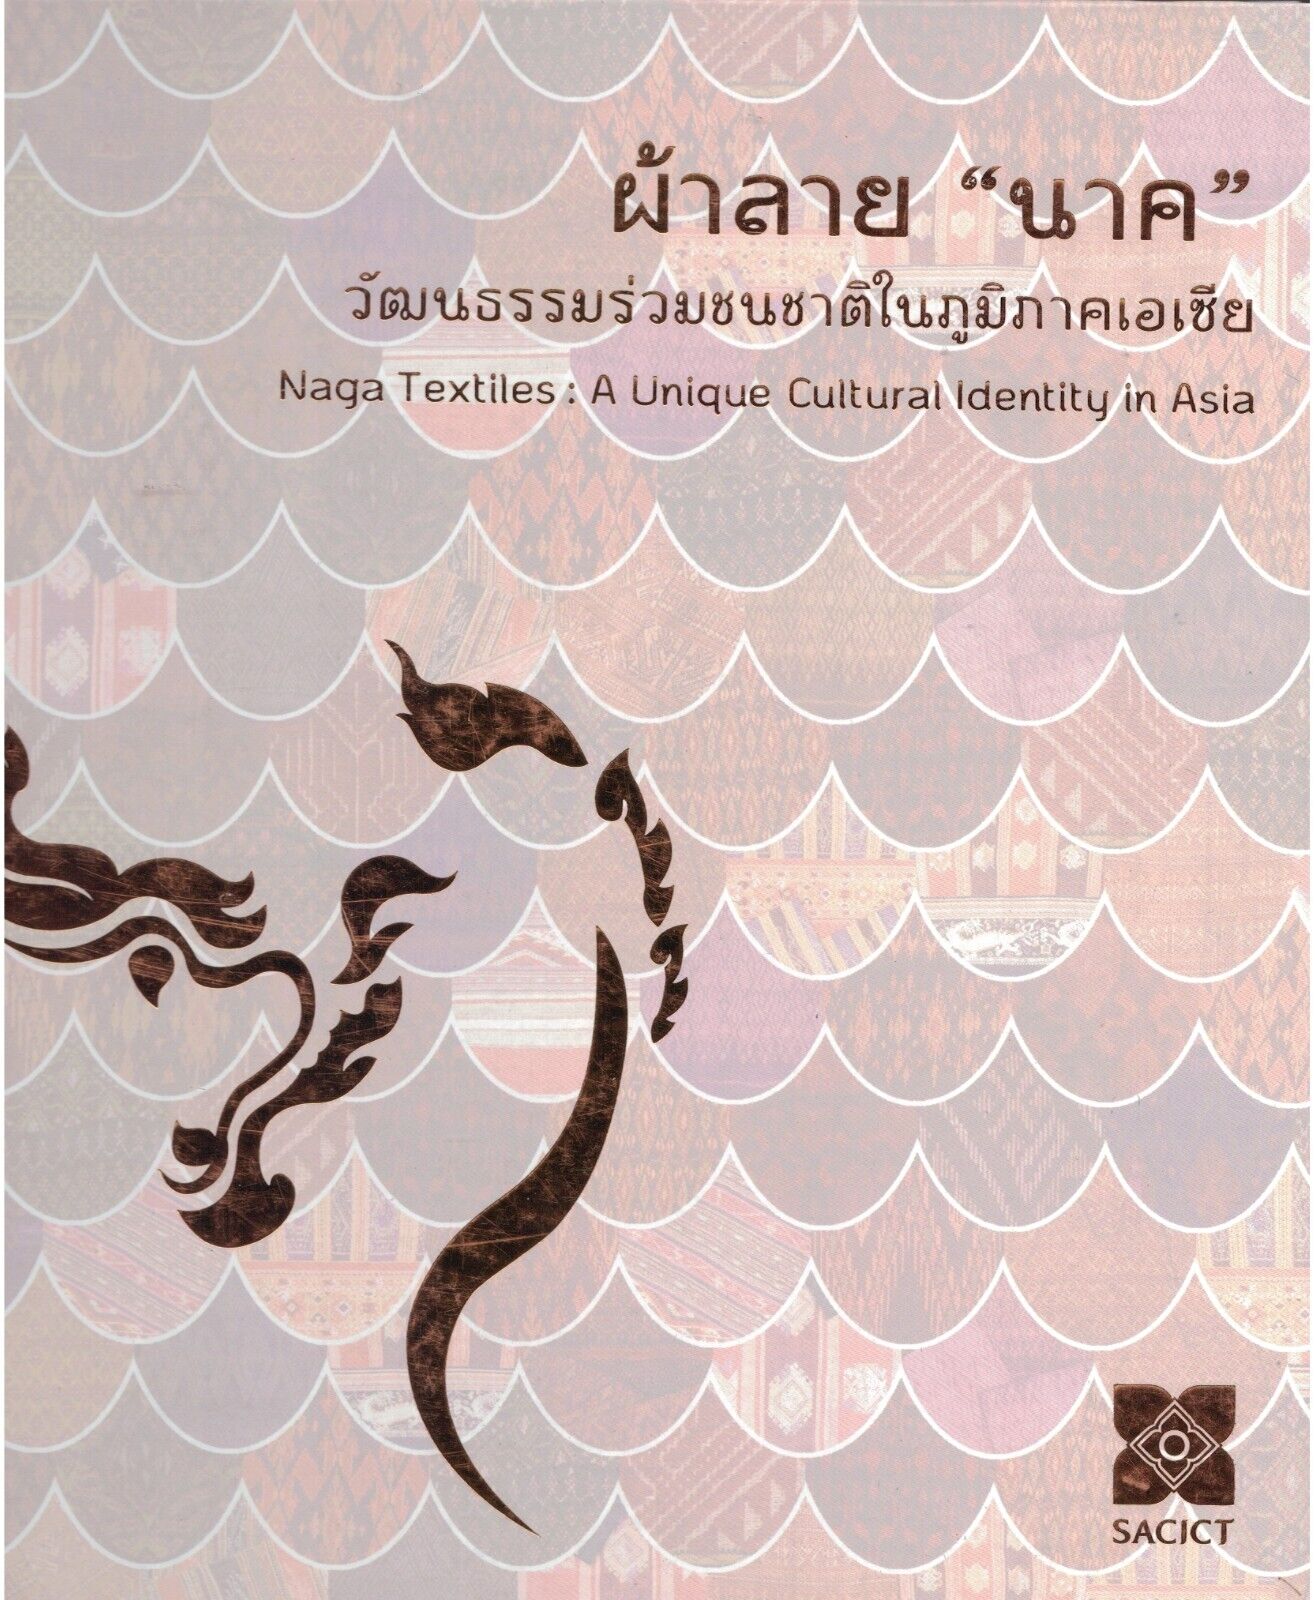 Naga Textiles: A Unique Cultural Identity in Asia